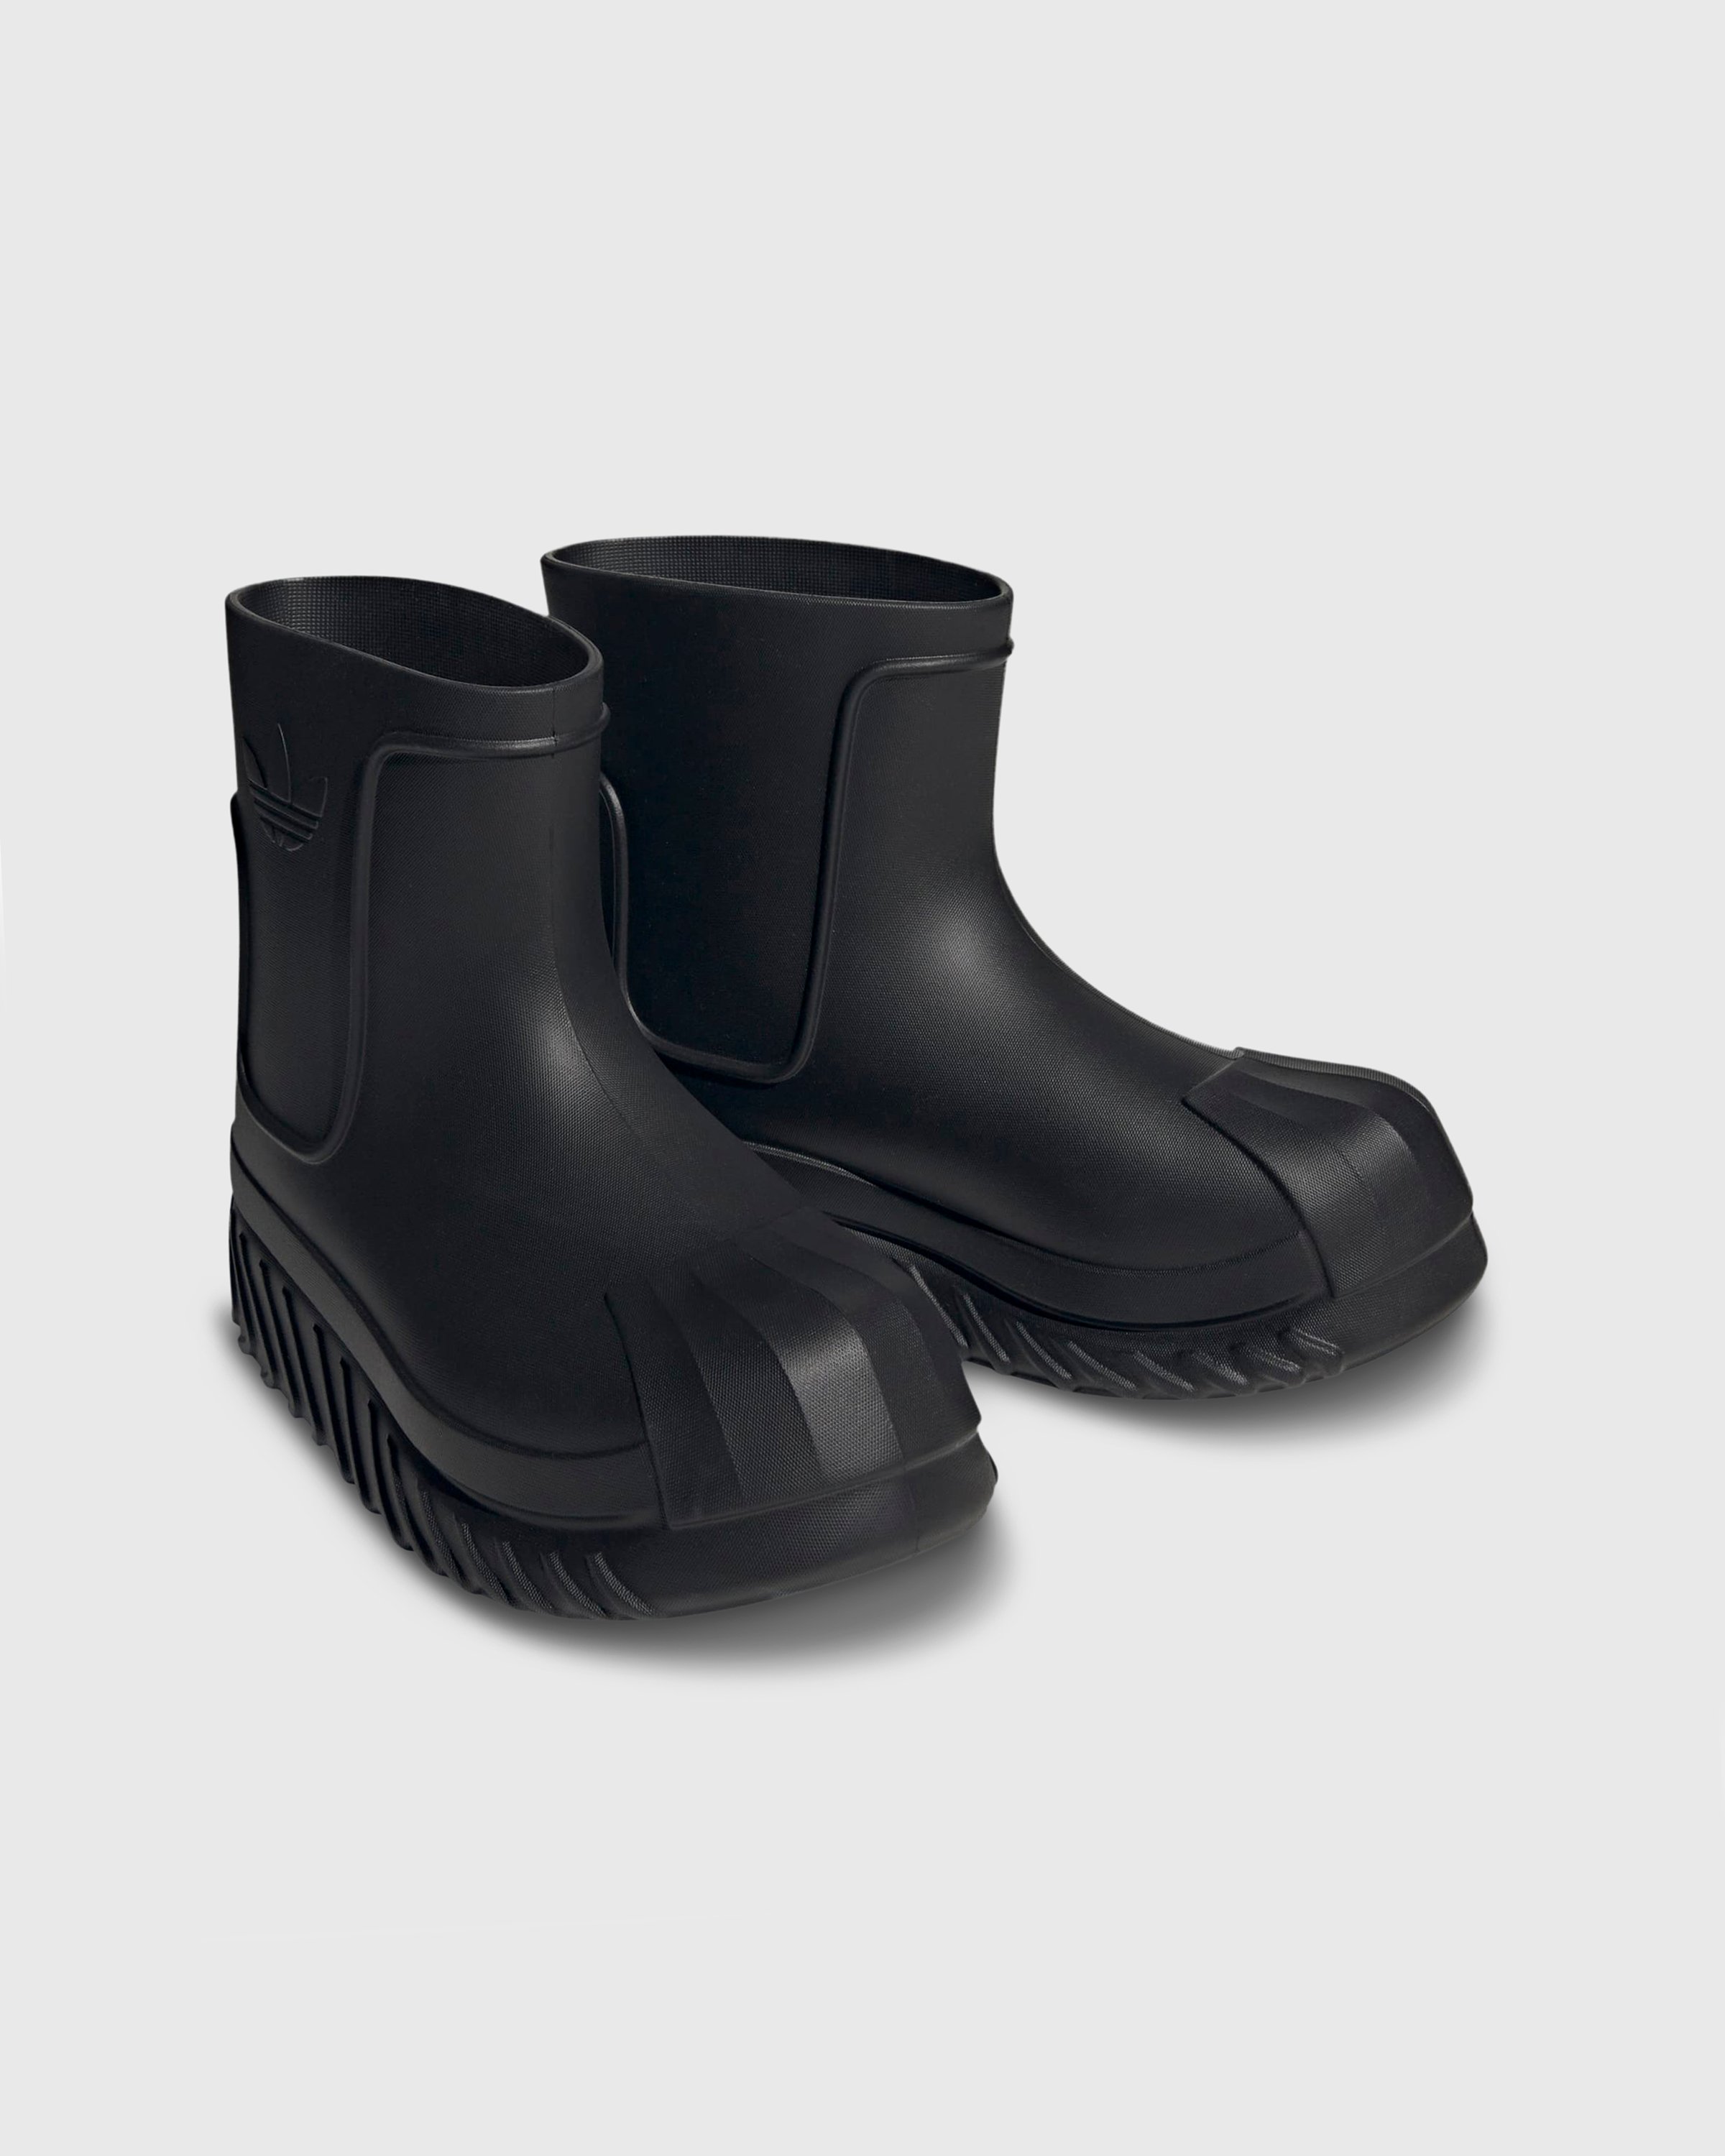 Adidas - ADIFOM SUPERSTAR BO CBLACK/CBLACK/GRESIX - Footwear - Black - Image 3